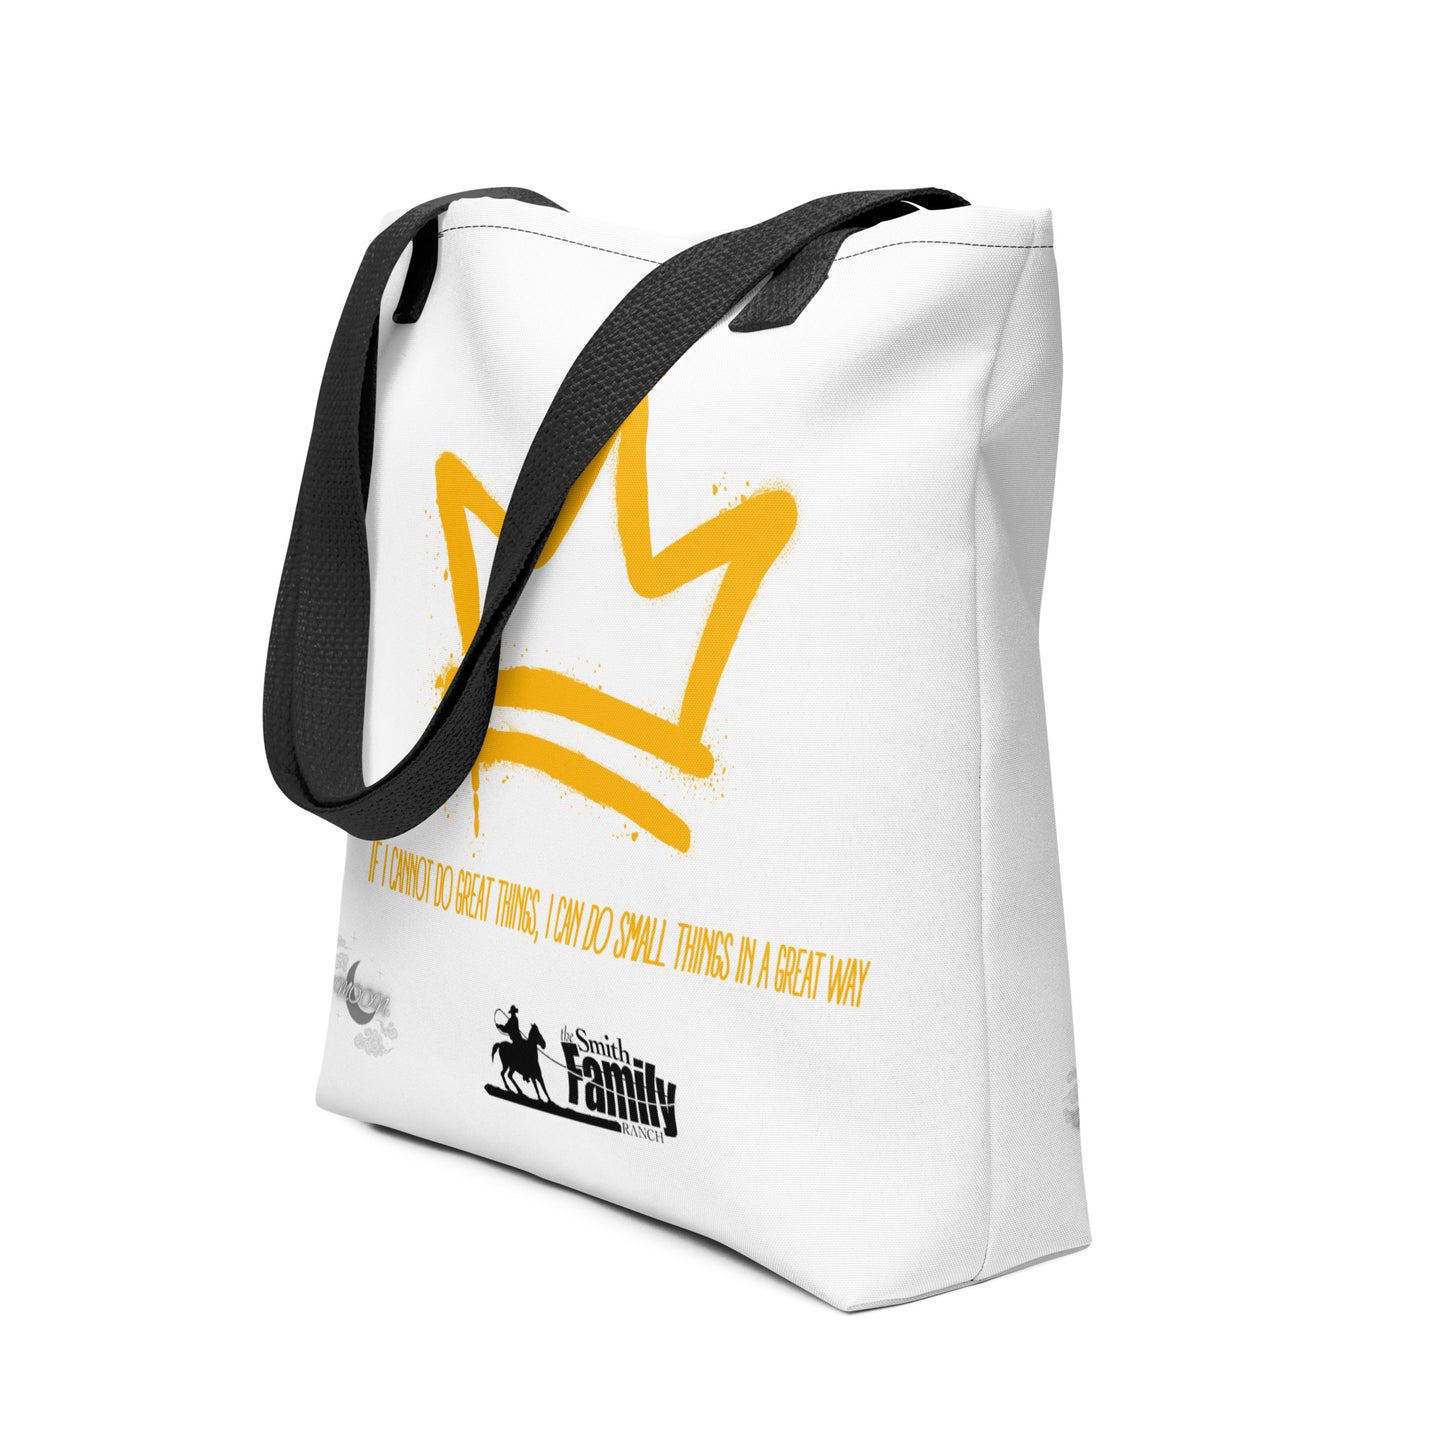 Tote bag (White & Gold Crown)